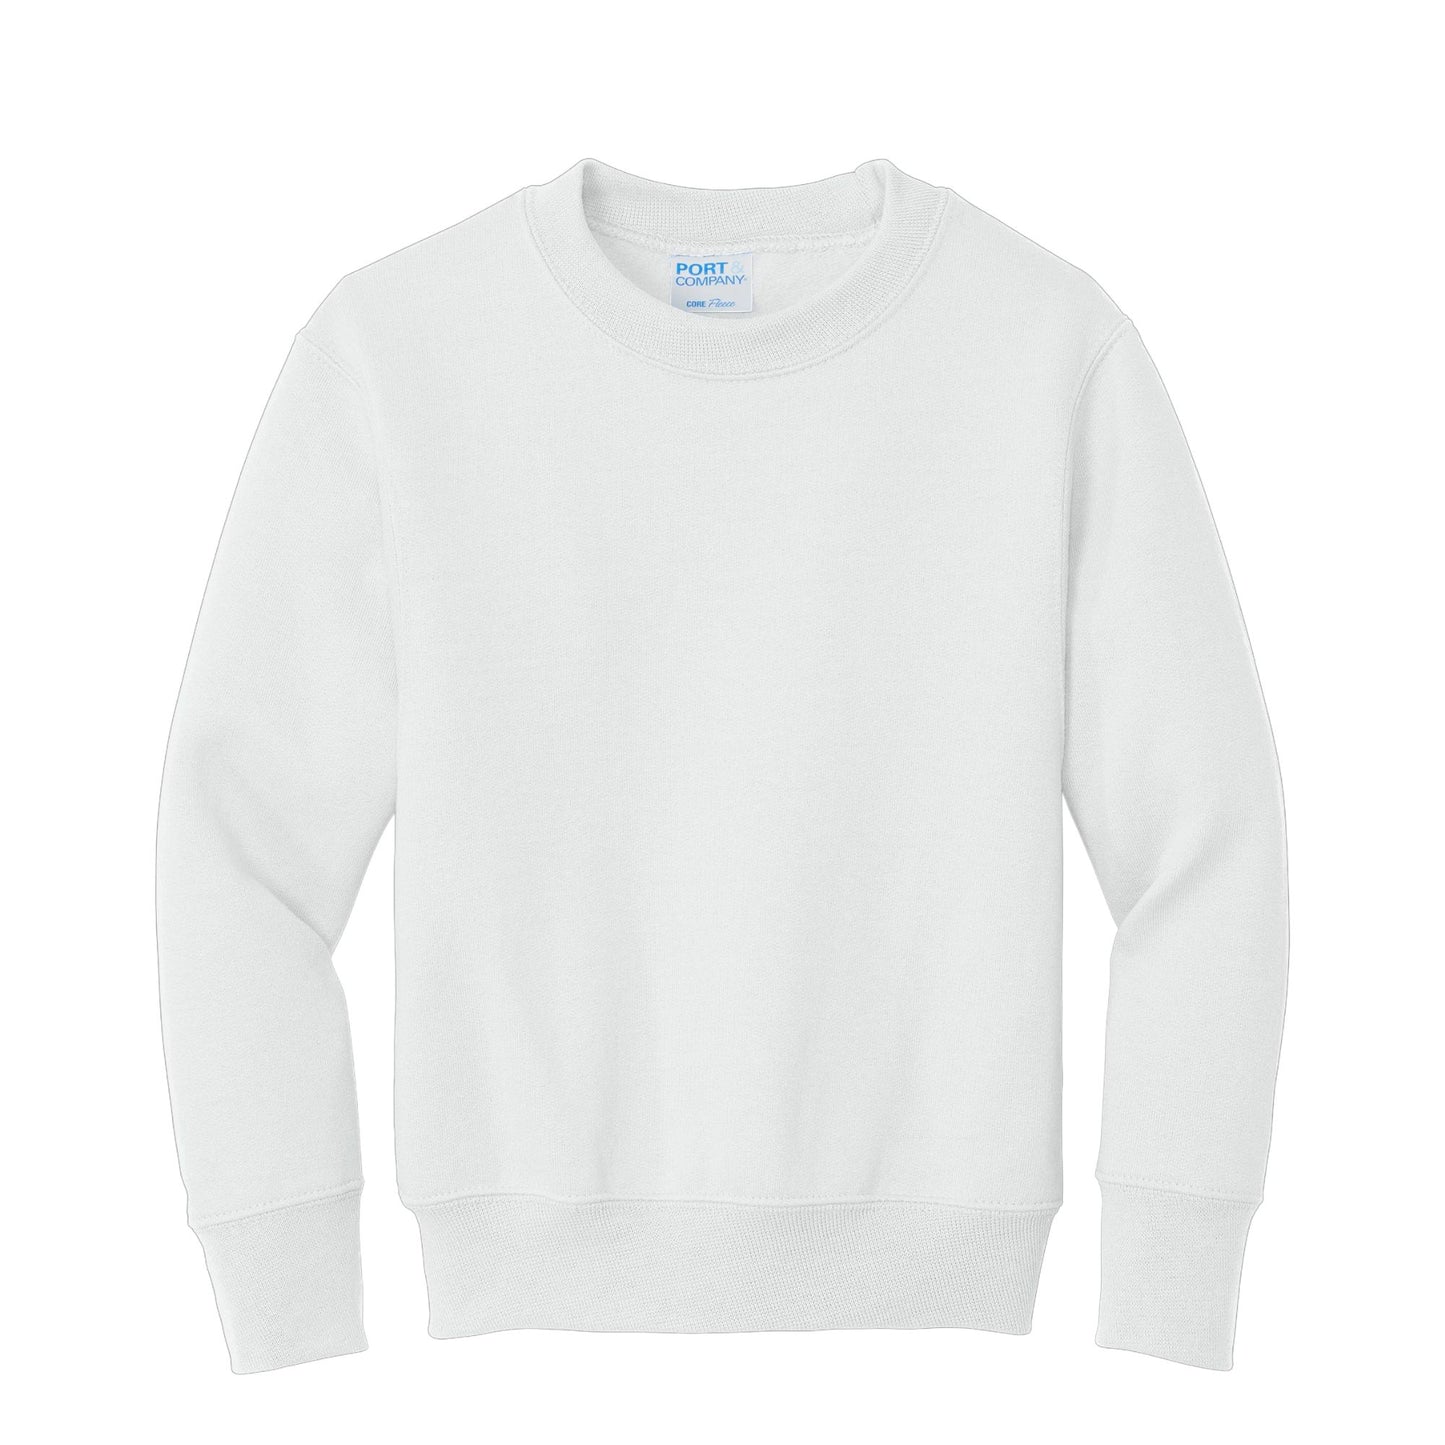 white crewneck sweatshirt